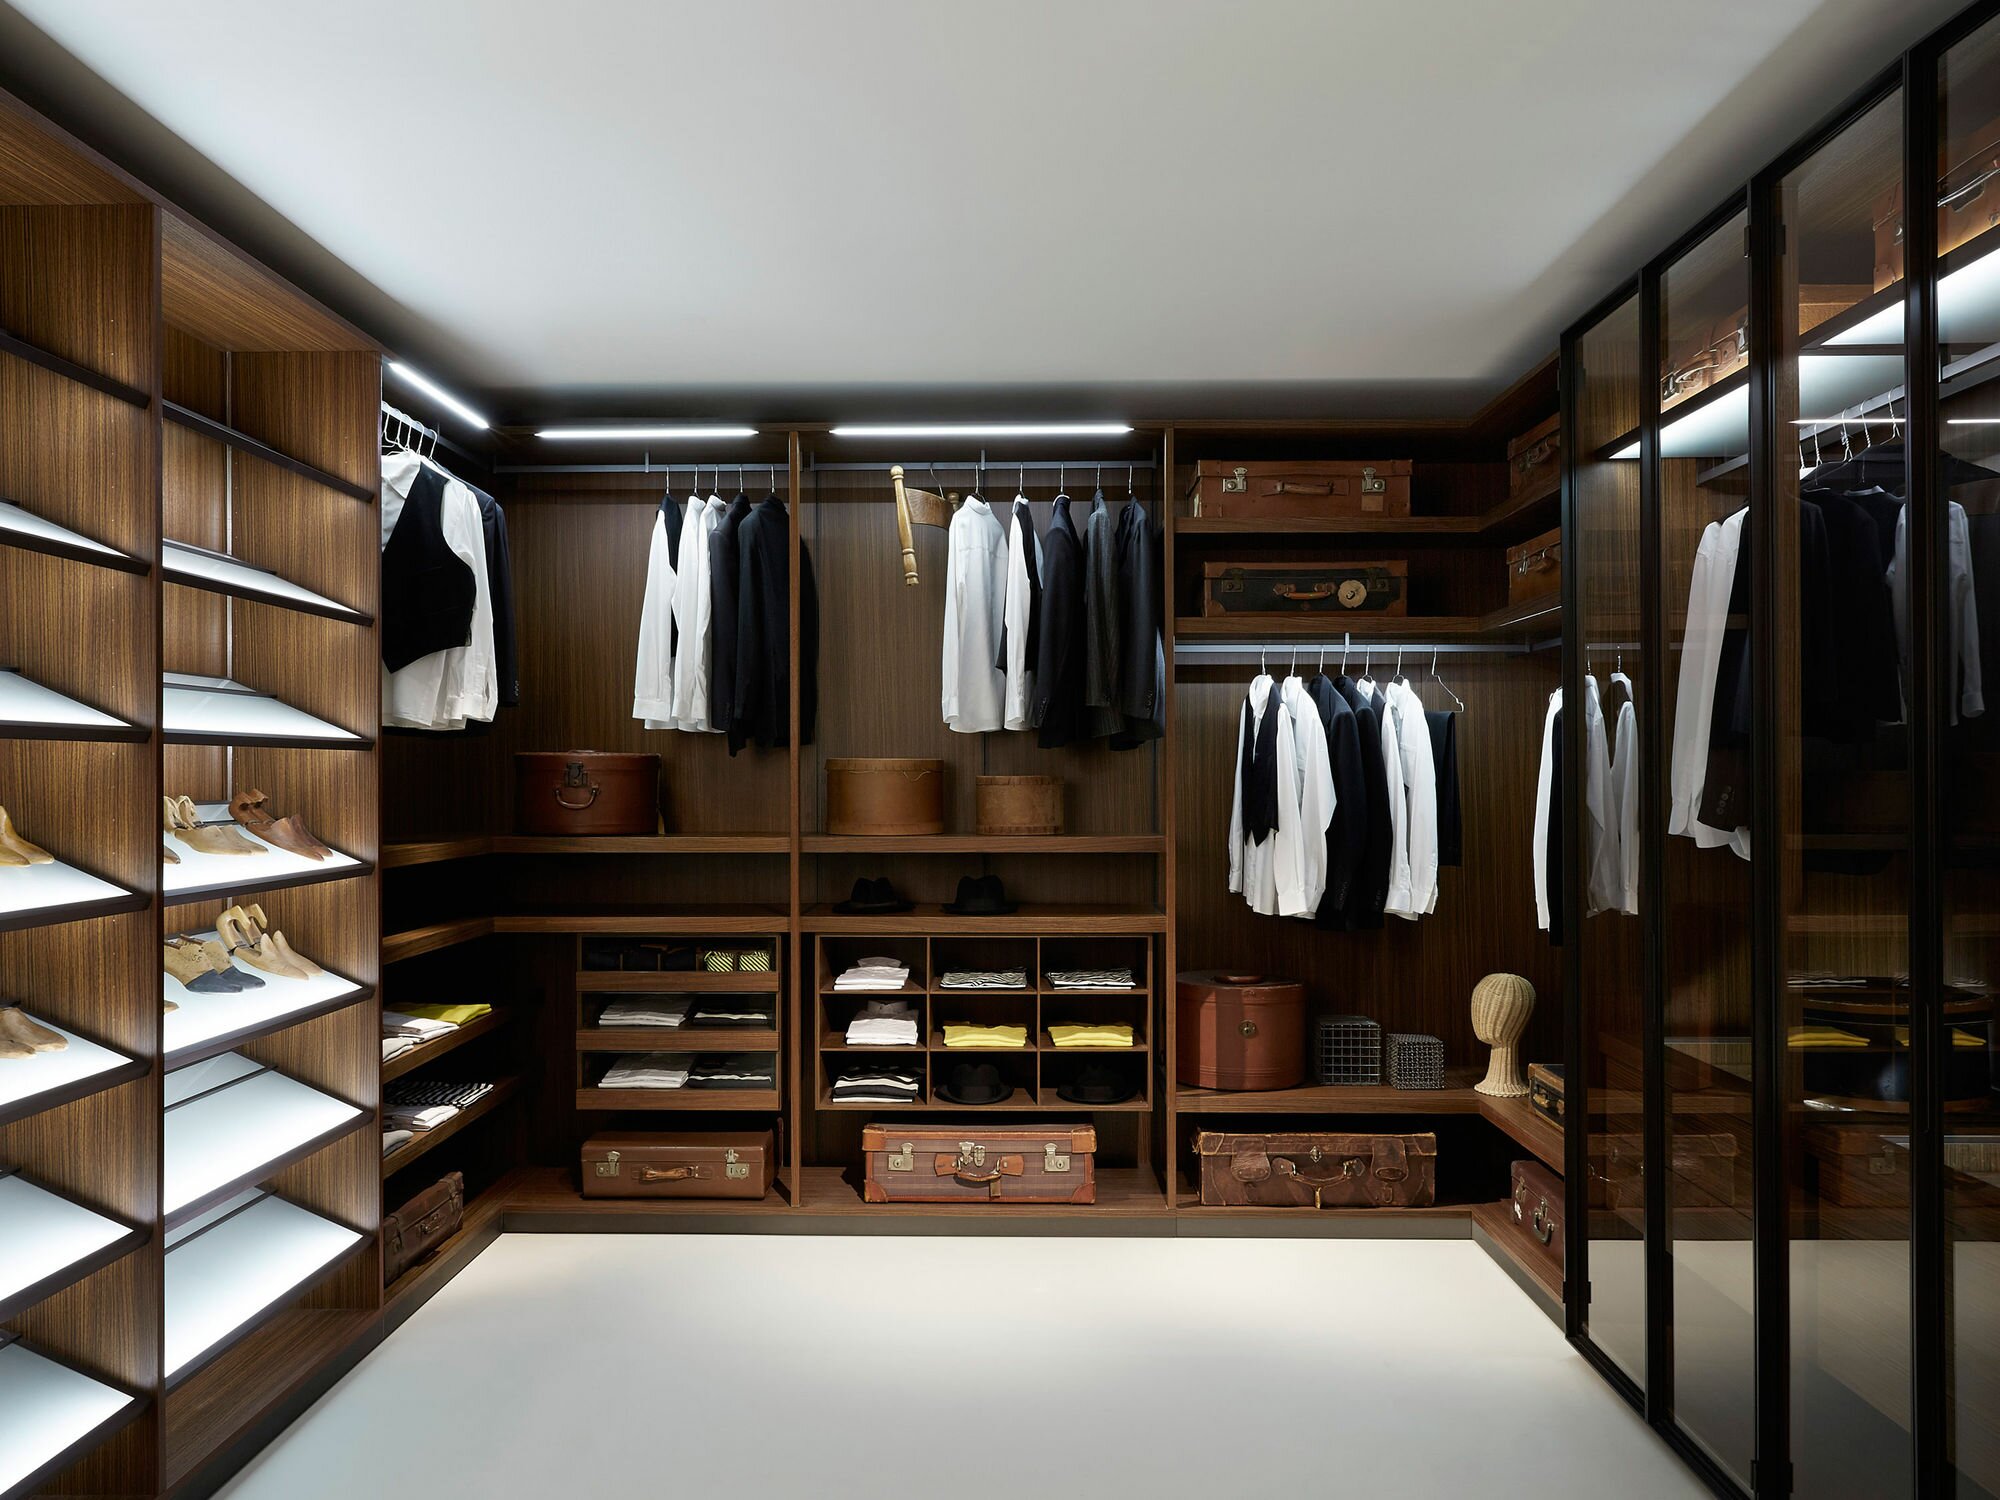 Inspiring Interior Storage Design Ideas with Diy Walk in Closet: Custom Closet Organizer | Cheap Closet Organizer Systems | Diy Walk In Closet